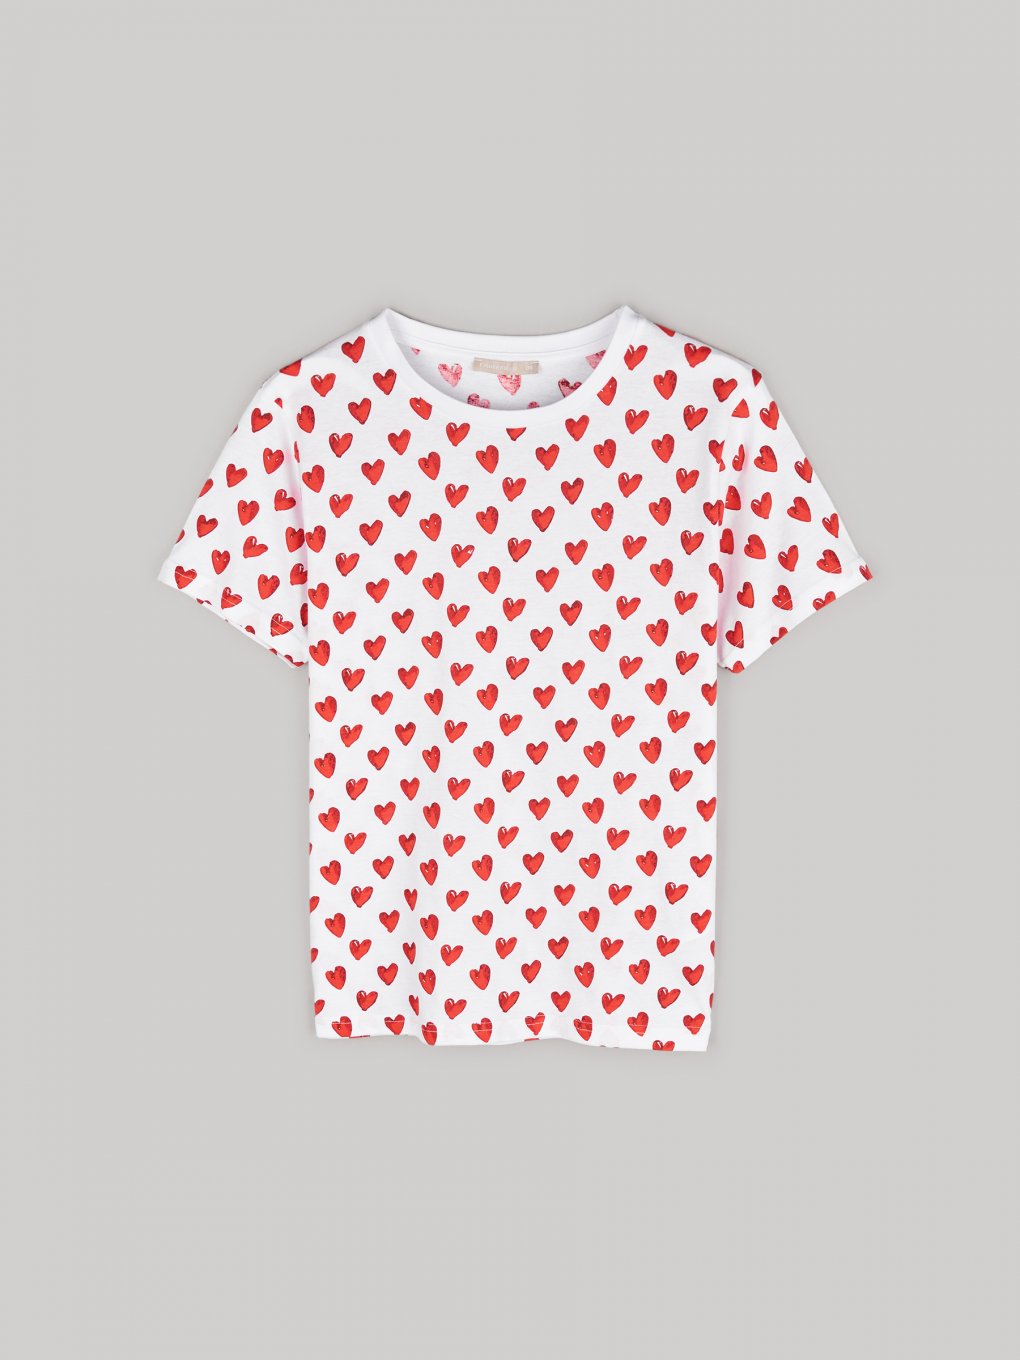 Hearts print cotton t-shirt